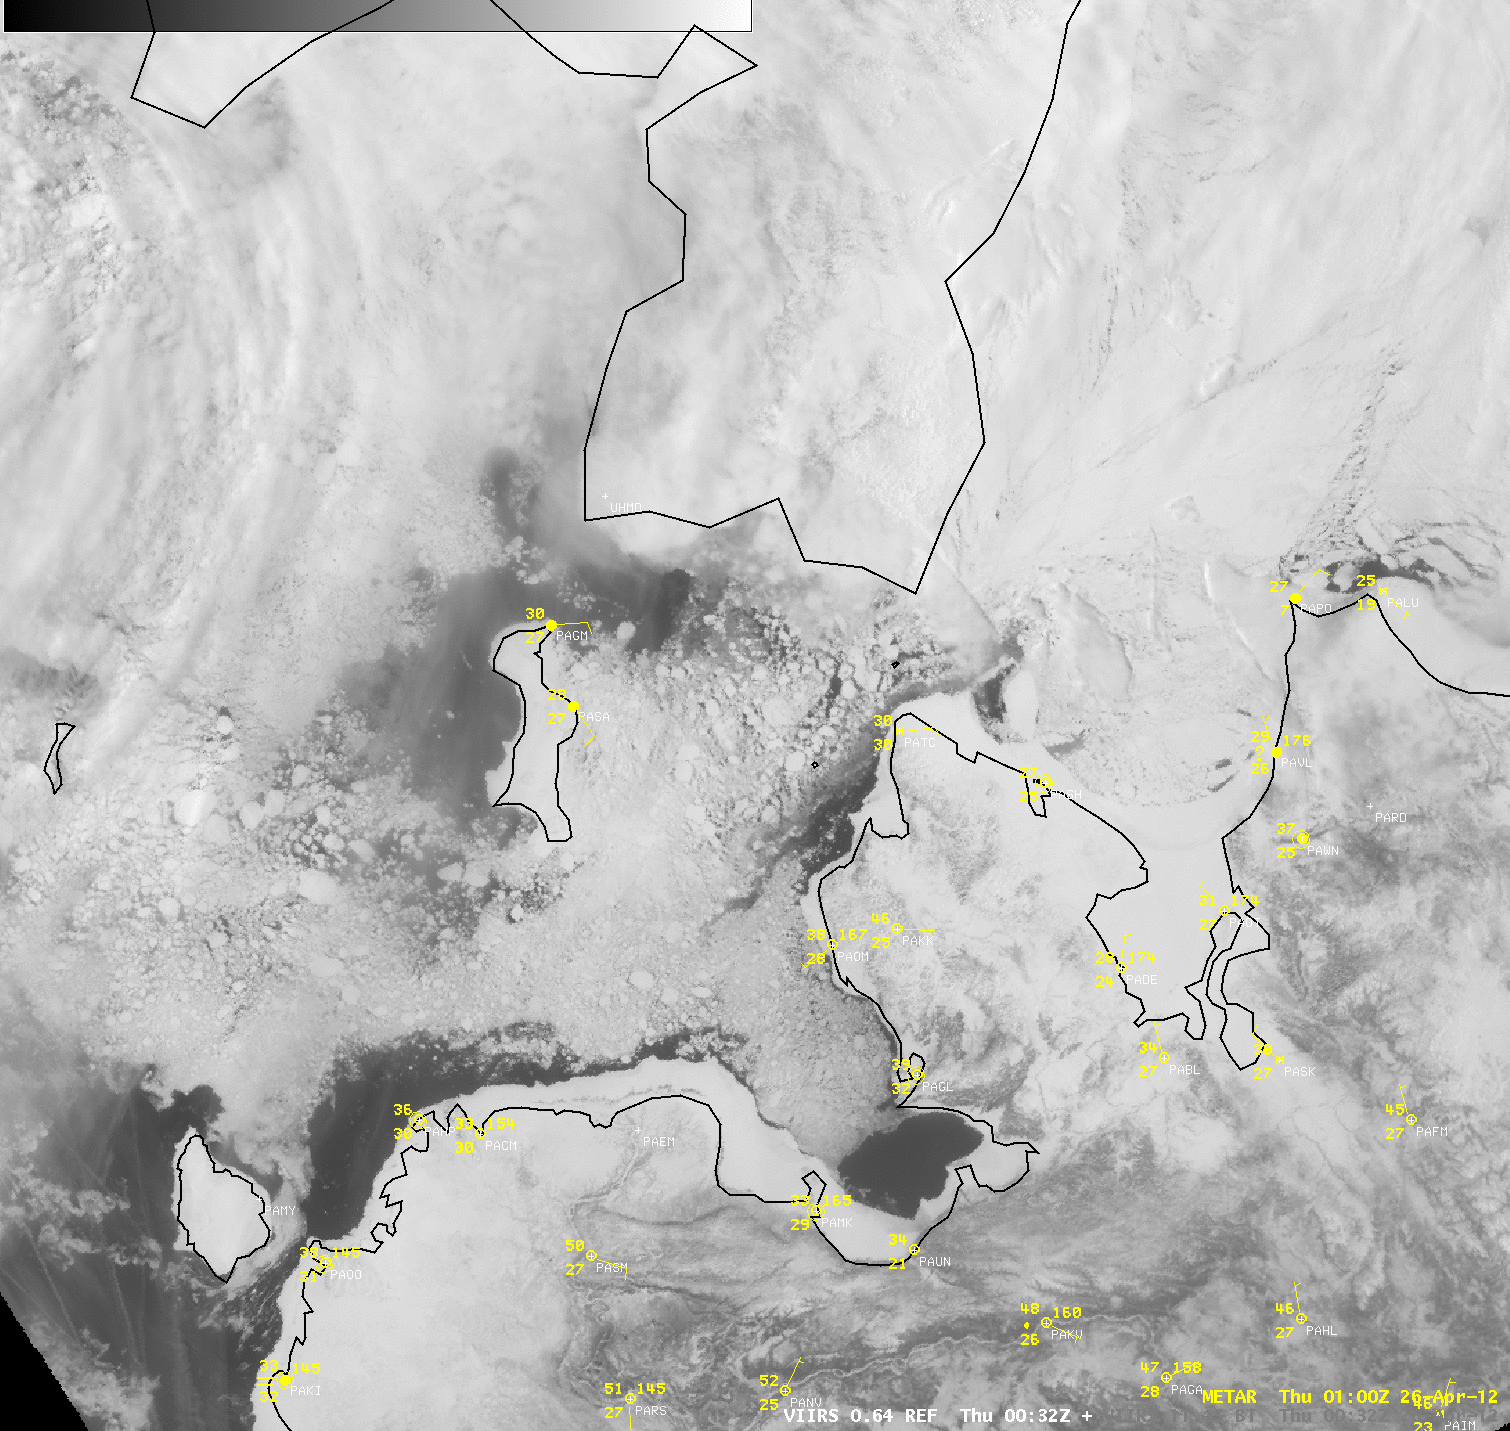 Suomi NPP VIIRS 0.64 Âµm visible and 1.61 Âµm near-IR images (Alaska and Bering Sea)